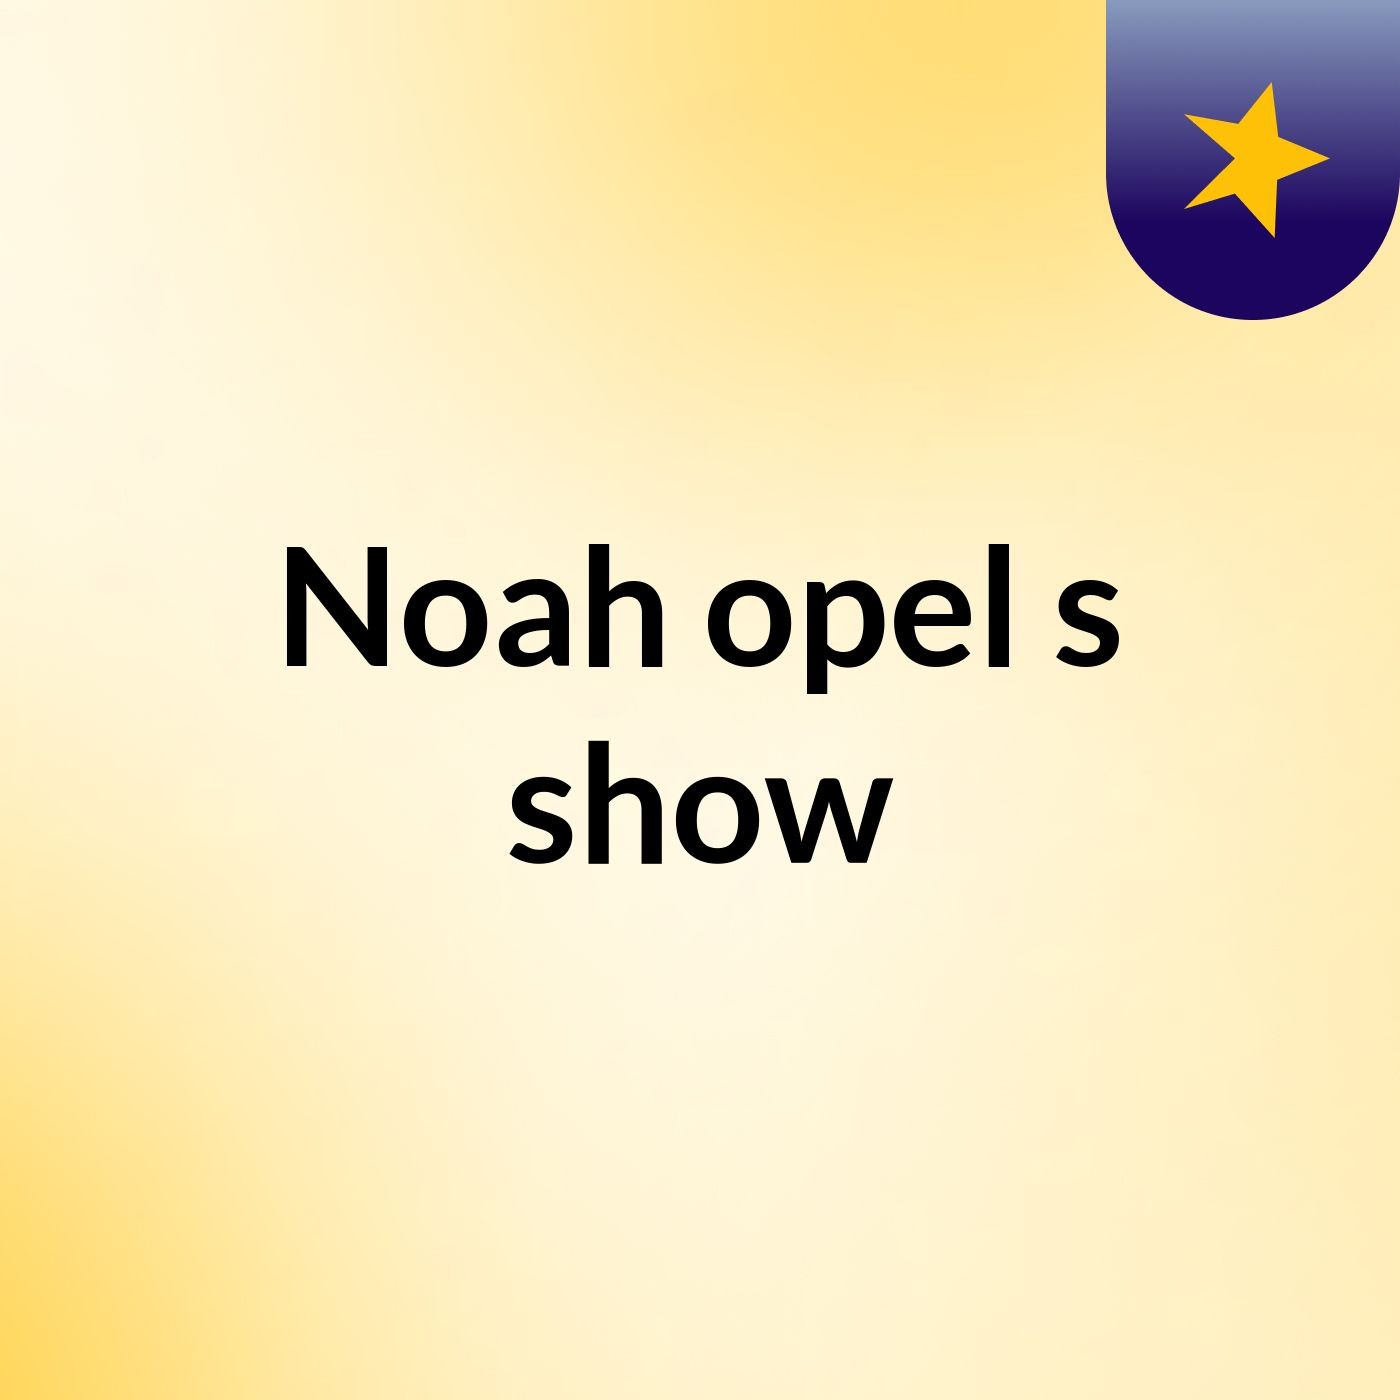 Noah opel's show